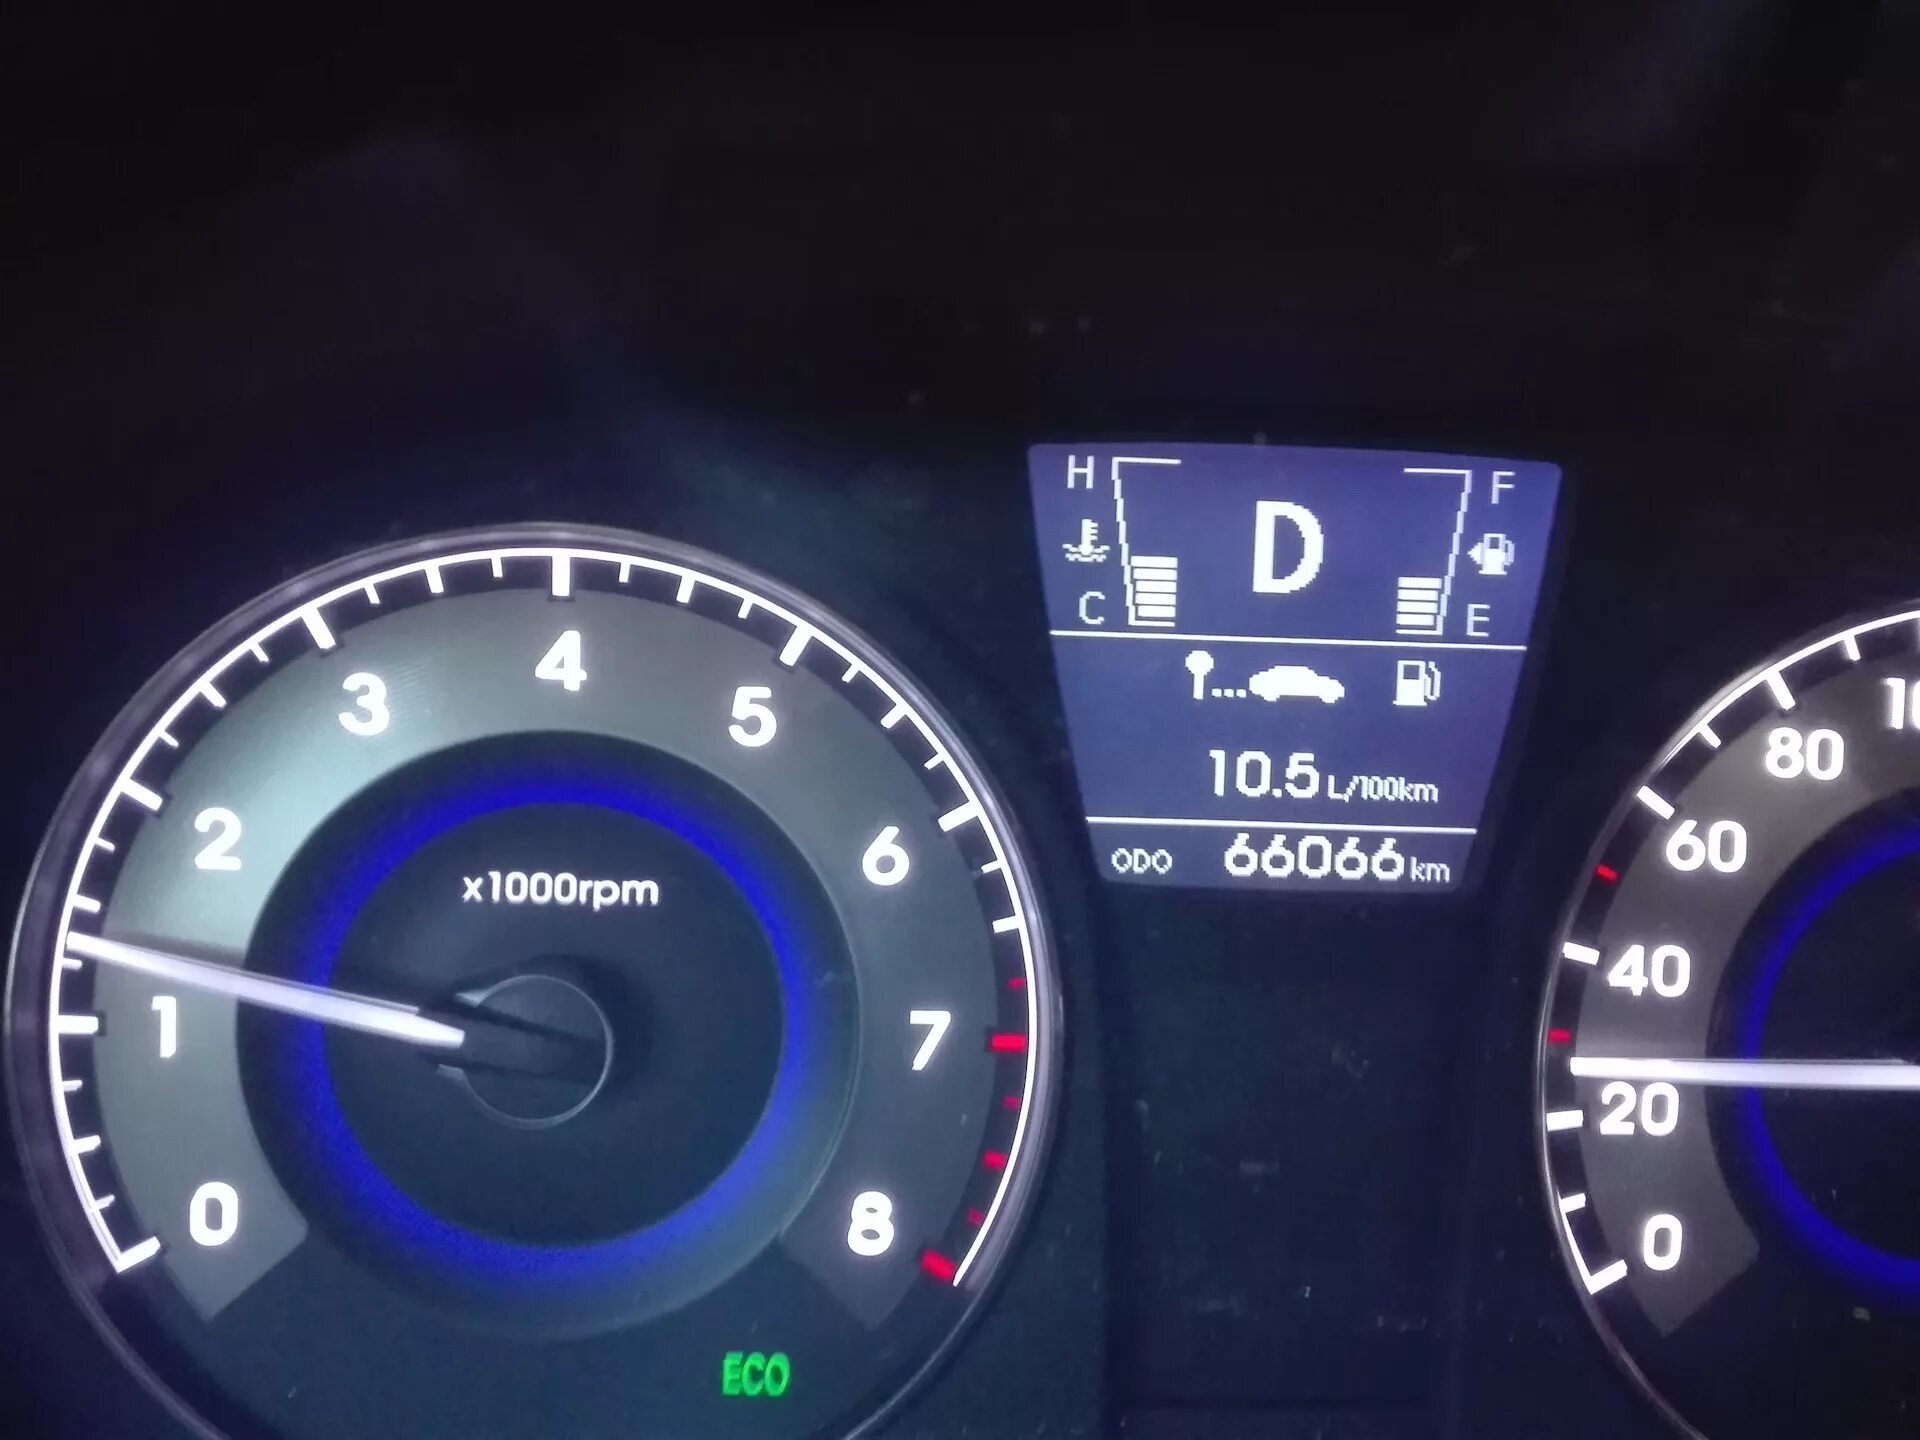 Электронный спидометр Hyundai Solaris 2017. Одометр Хендай Солярис. Спидометр Солярис 1.6 2013. Хендай Солярис одометр 163000 км.